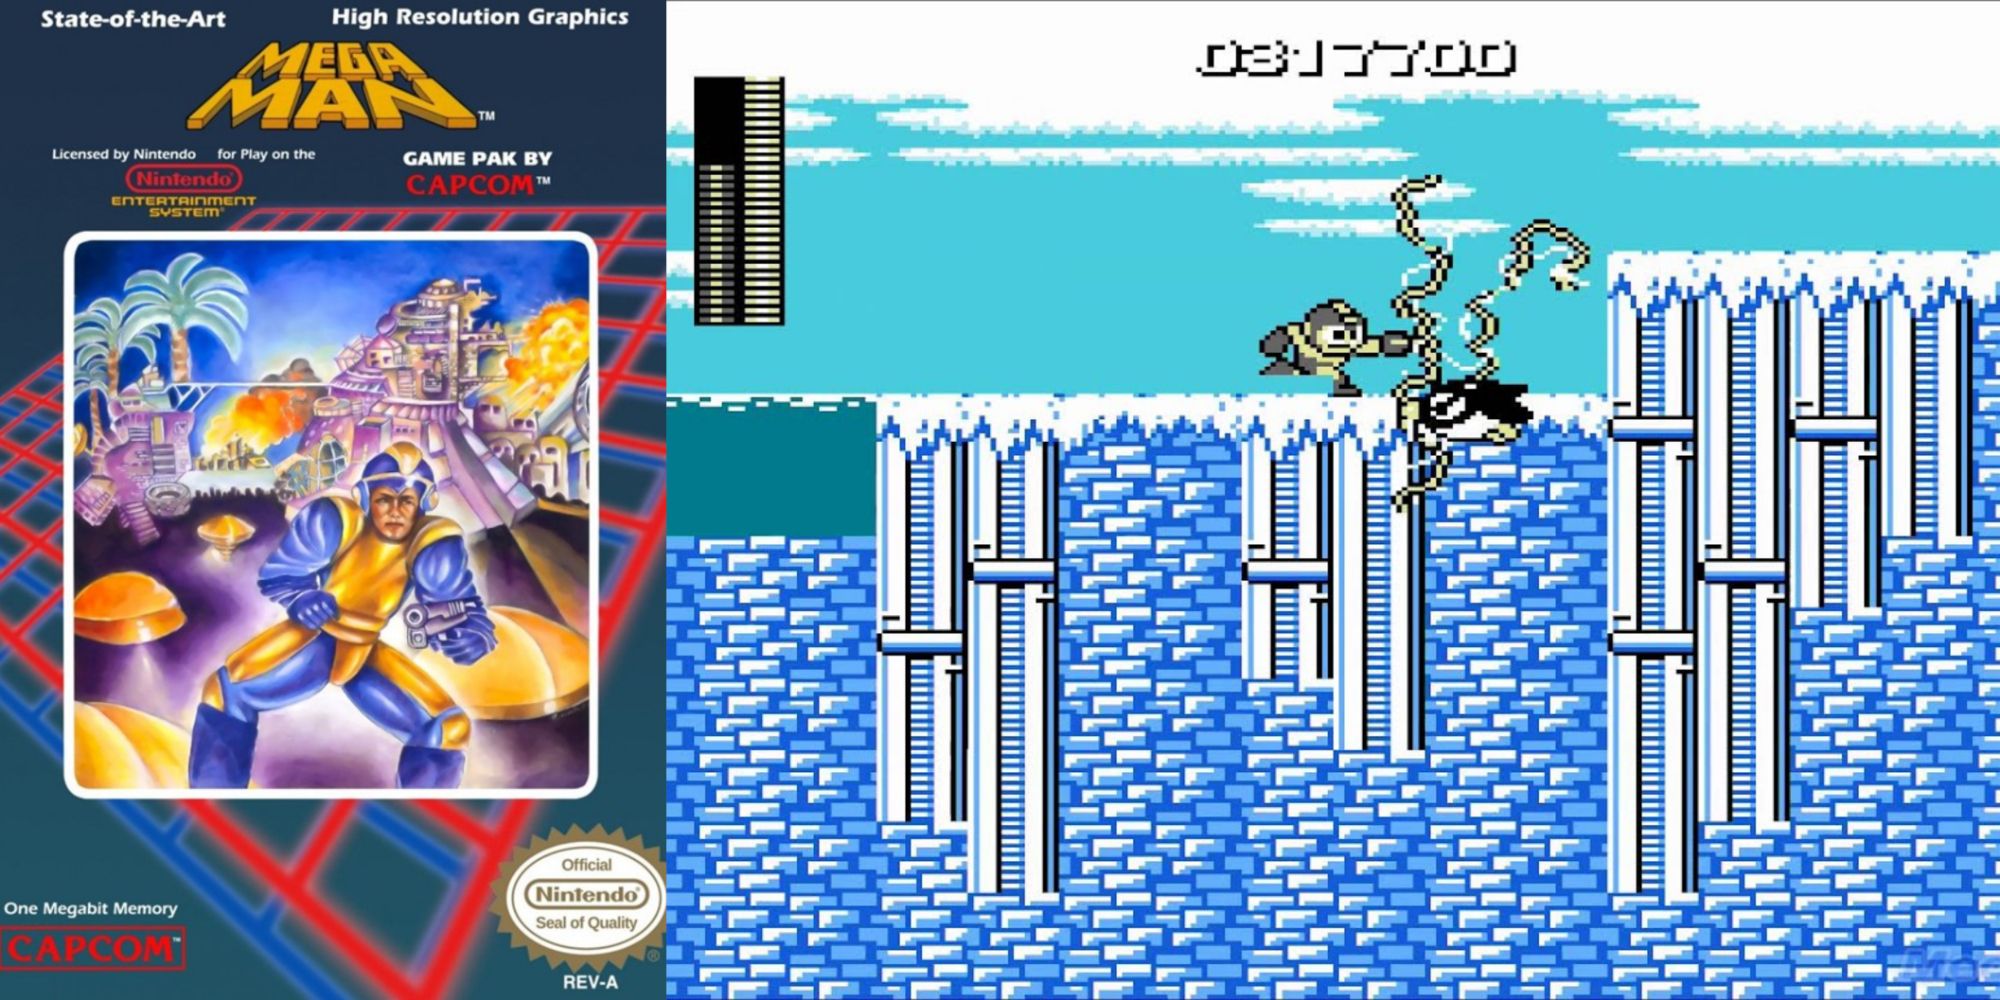 Mega Man cover art and a screenshot of the game.